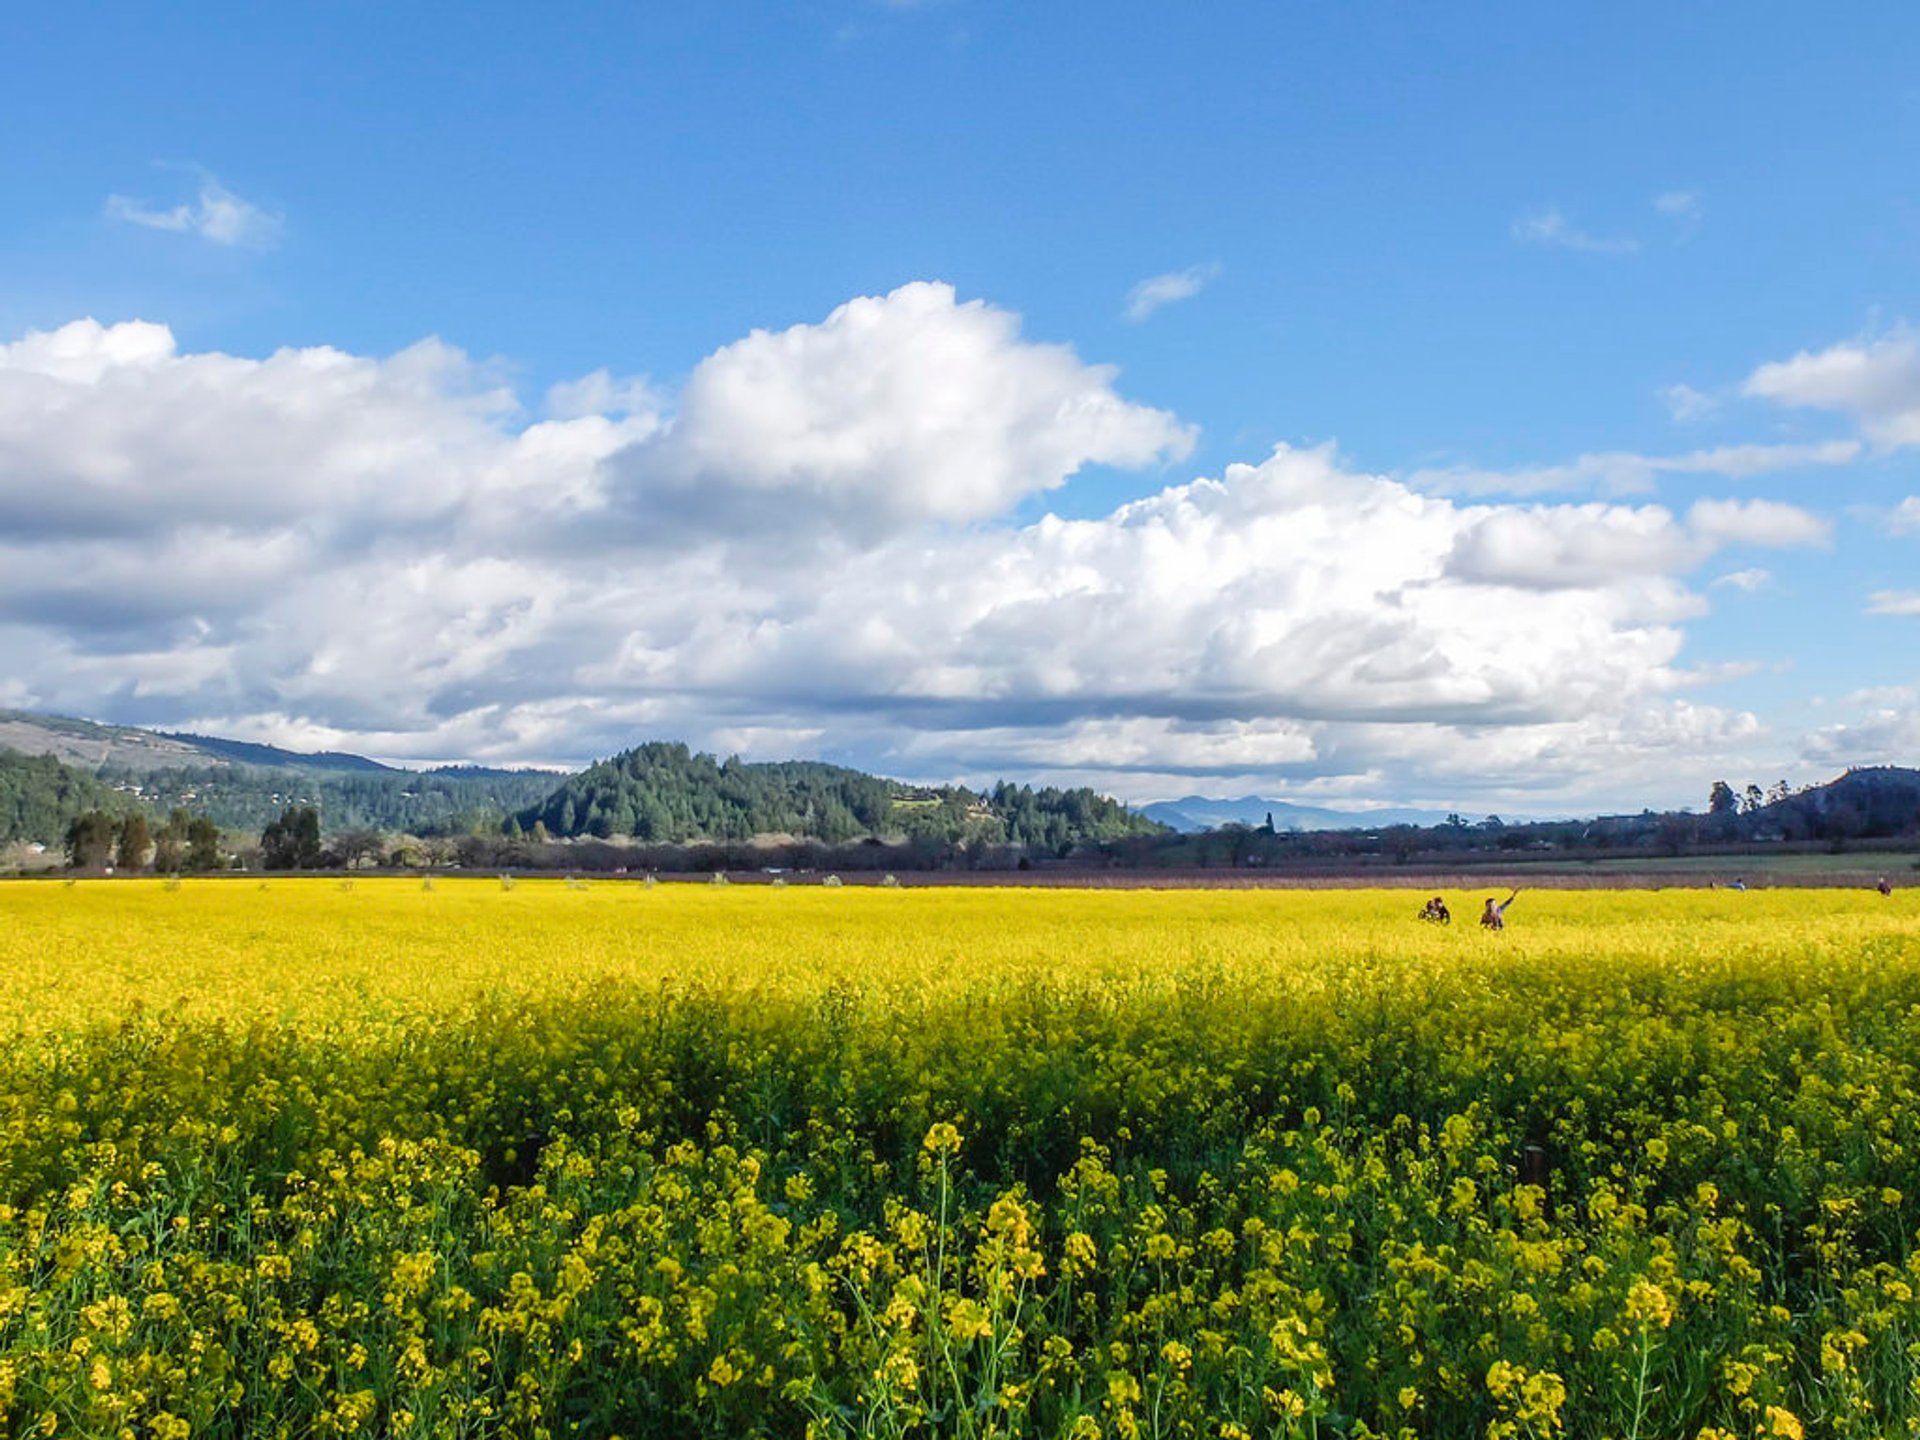 Mustard Flowers in Napa Valley